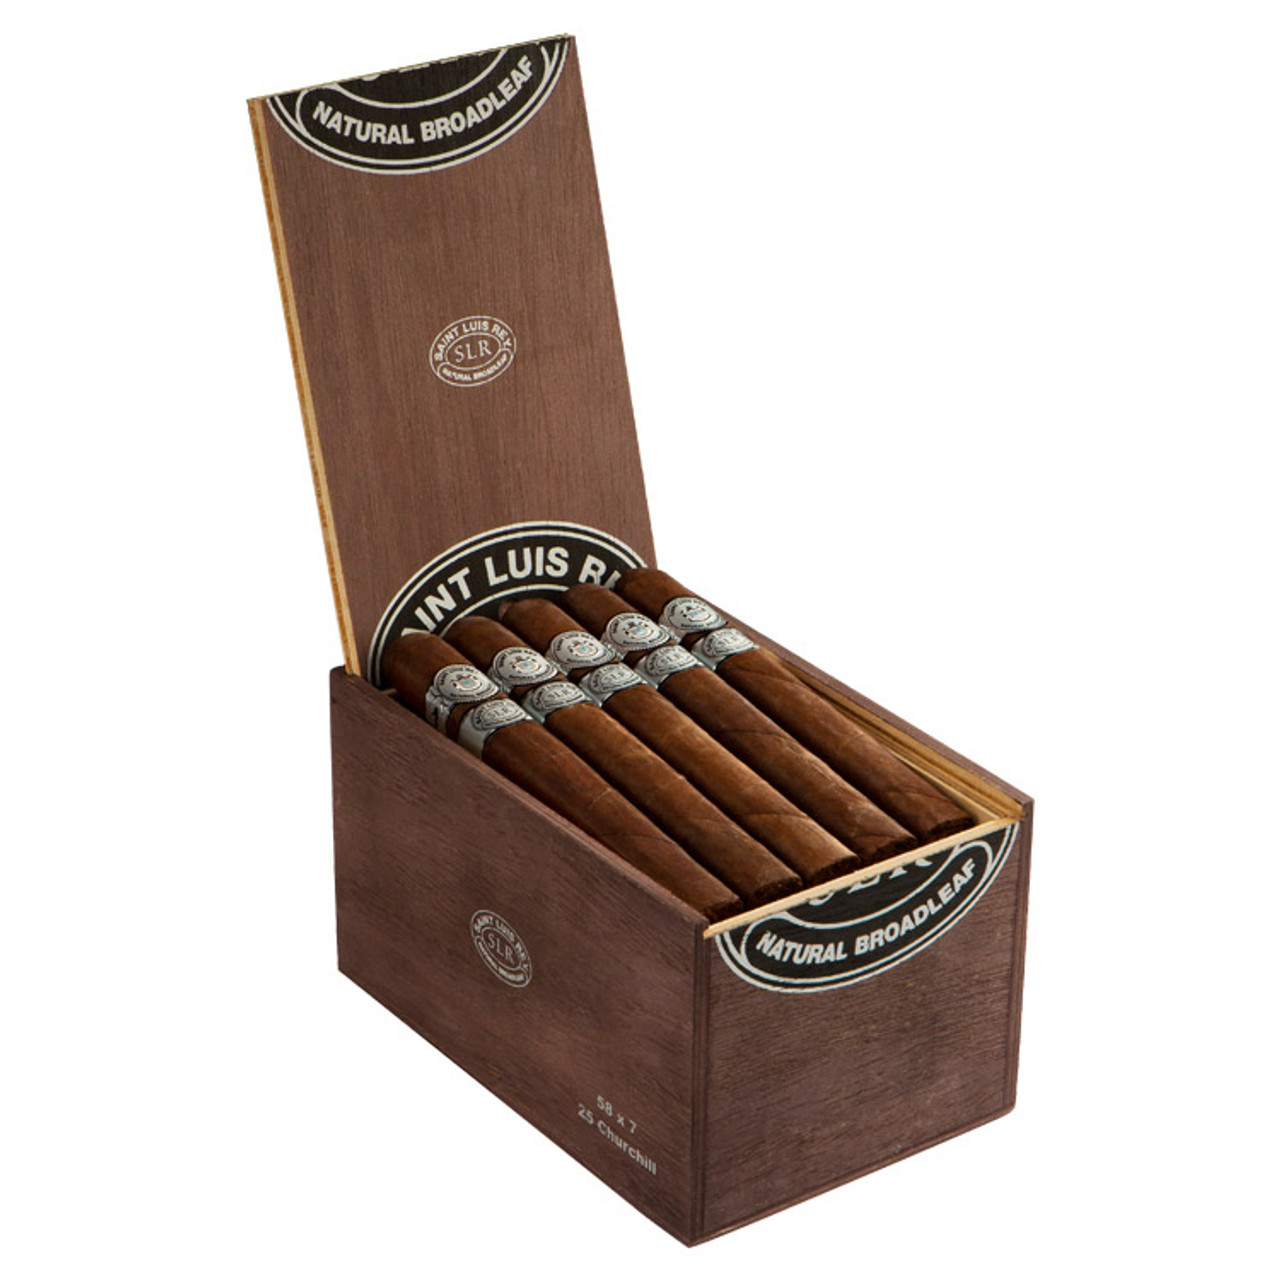 Saint Luis Rey Natural Broadleaf Churchill Cigars - 7 x 58 (Box of 25)